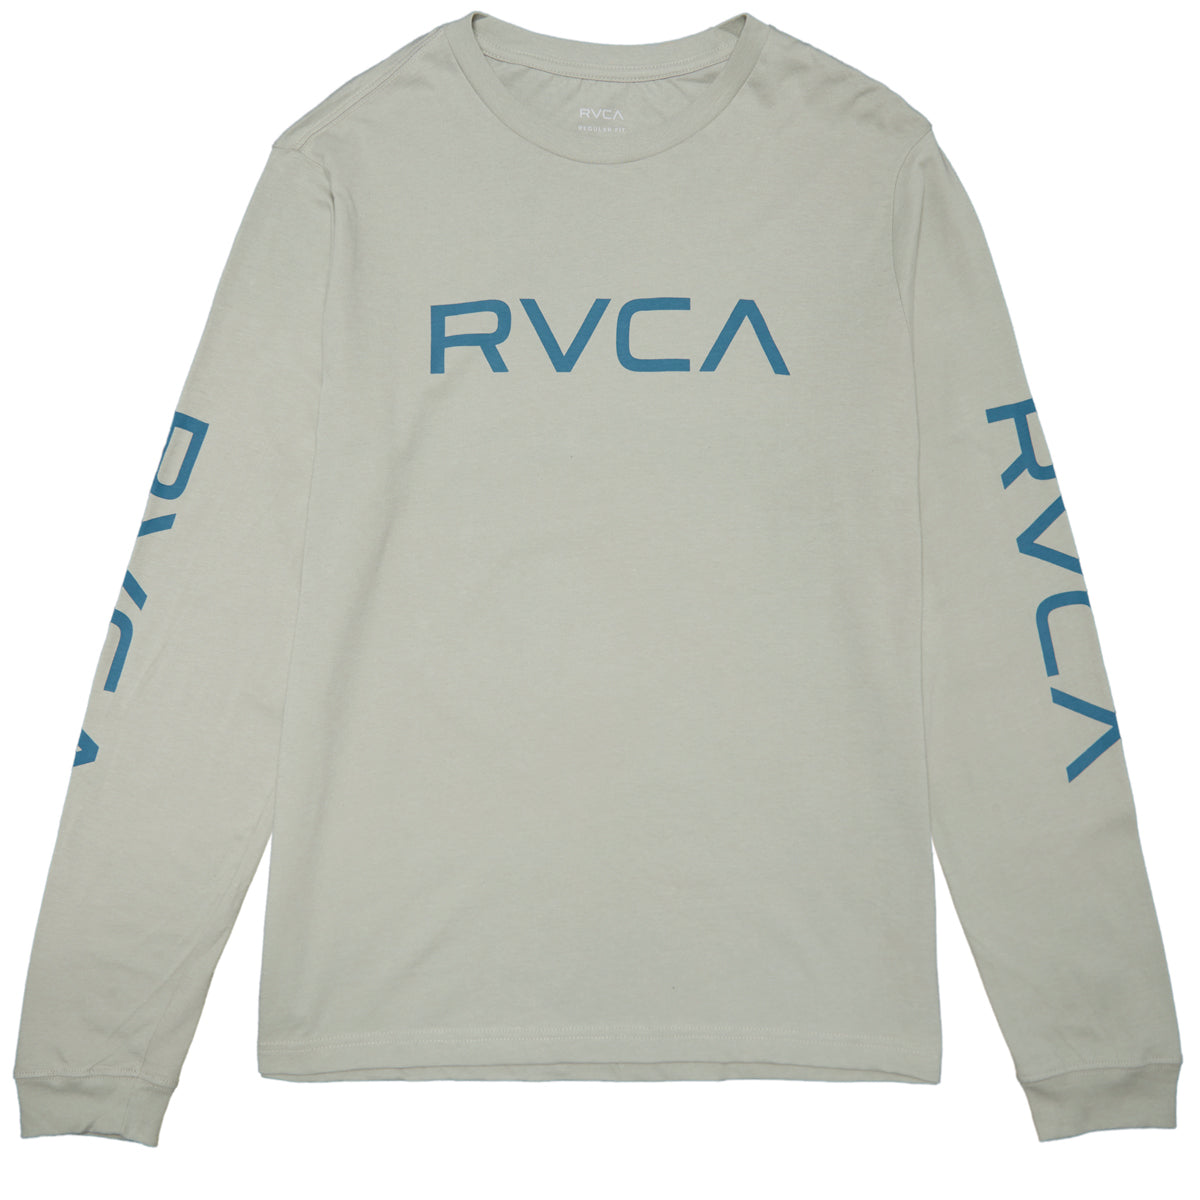 RVCA Big RVCA Long Sleeve T-Shirt - Iron image 1